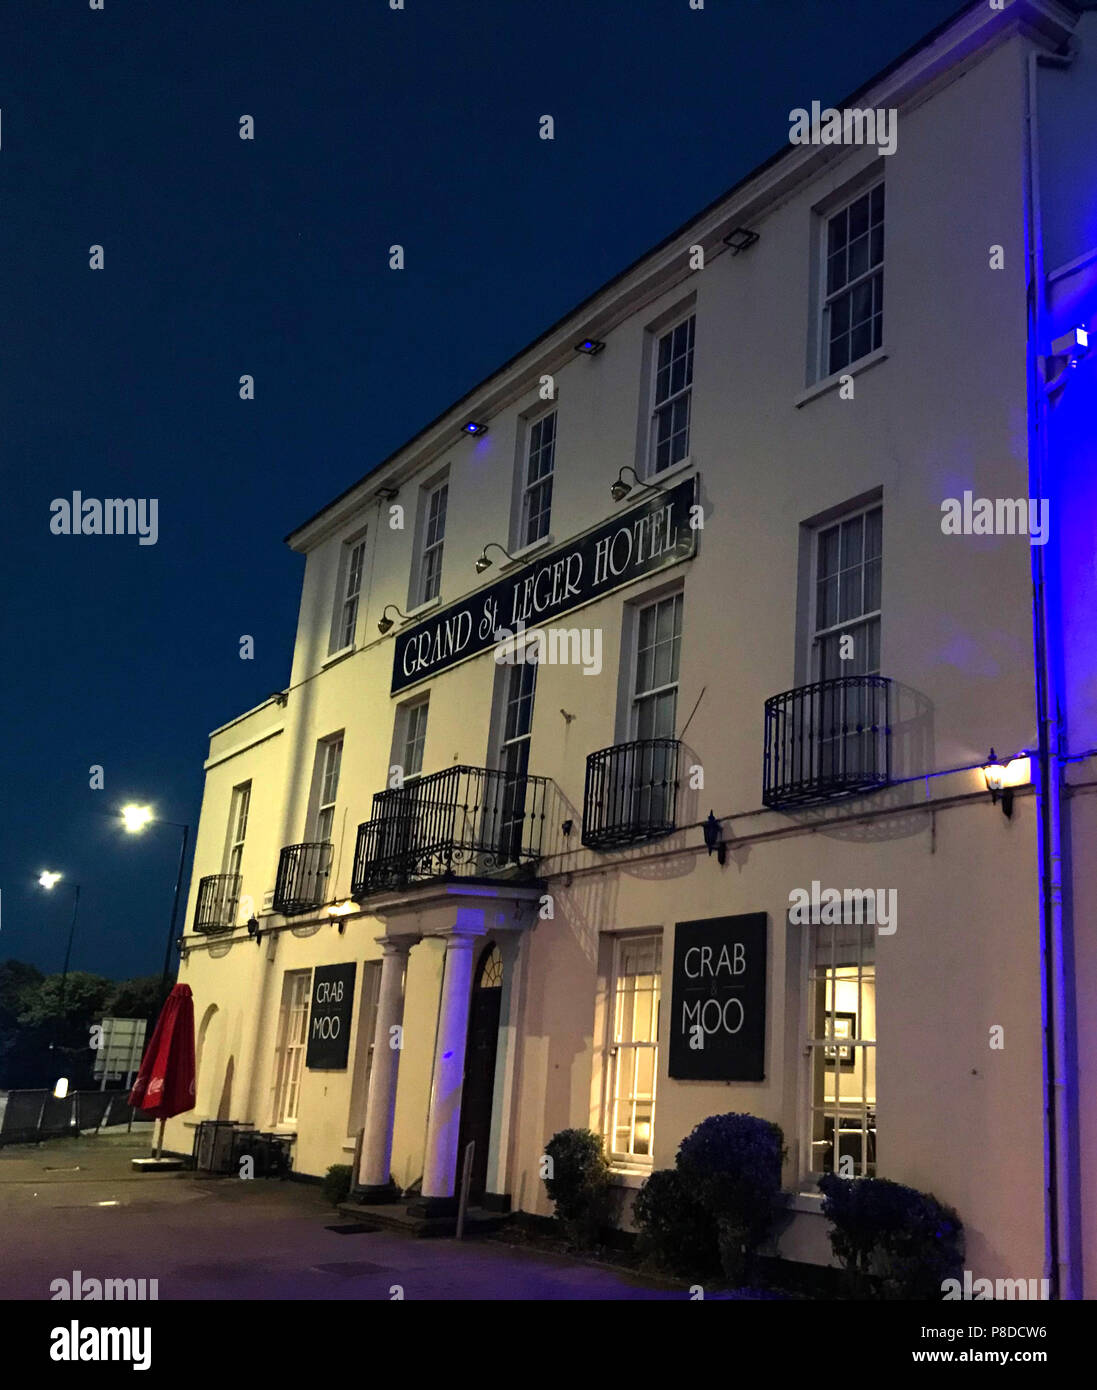 Grand St Leger Hotel 1810 au crépuscule, hippodrome Hotel, Bennetthorpe, Doncaster, South Yorkshire, ANGLETERRE, ROYAUME-UNI, DN2 6AX Banque D'Images